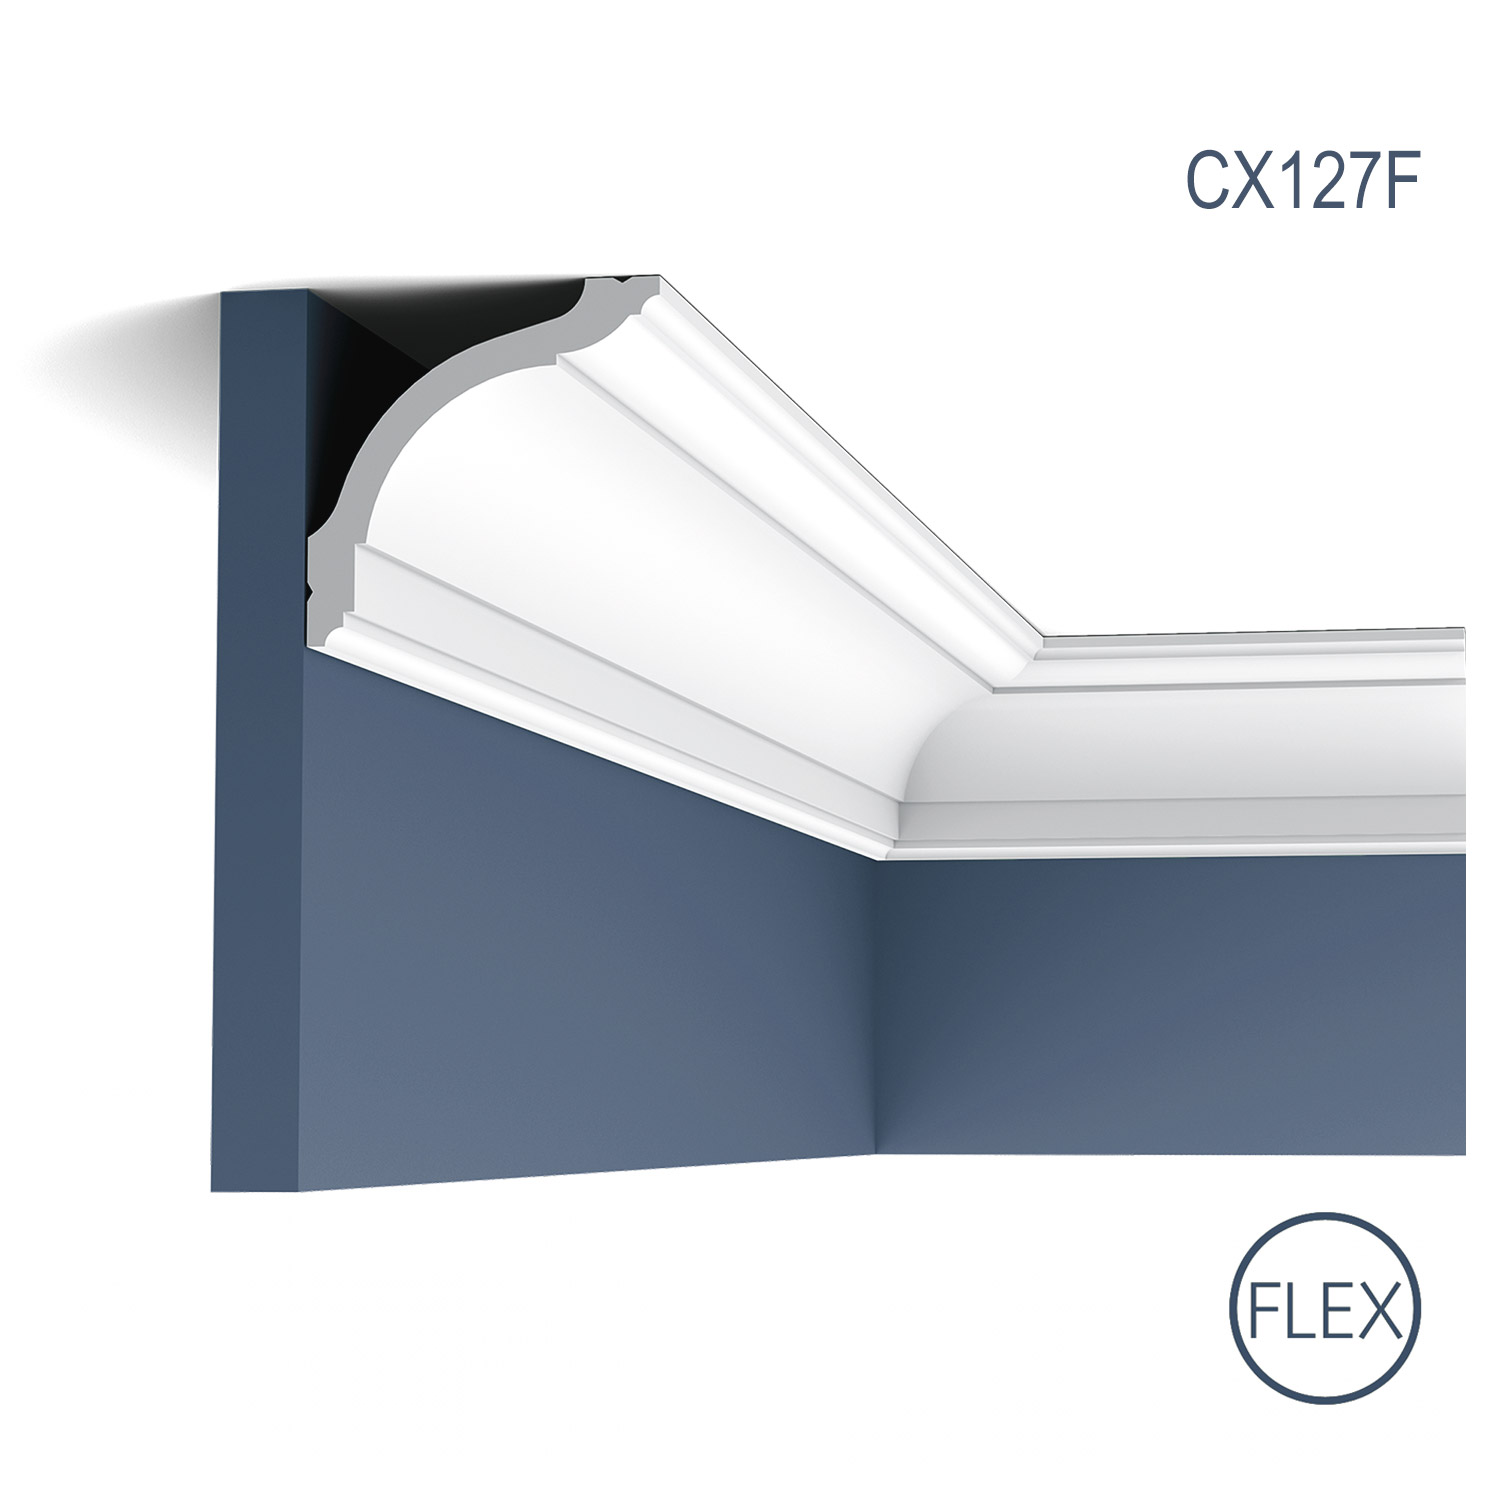 Cornisa Flex Axxent CX127F, Dimensiuni: 200 X 9.4 X 9.4 cm, Orac Decor